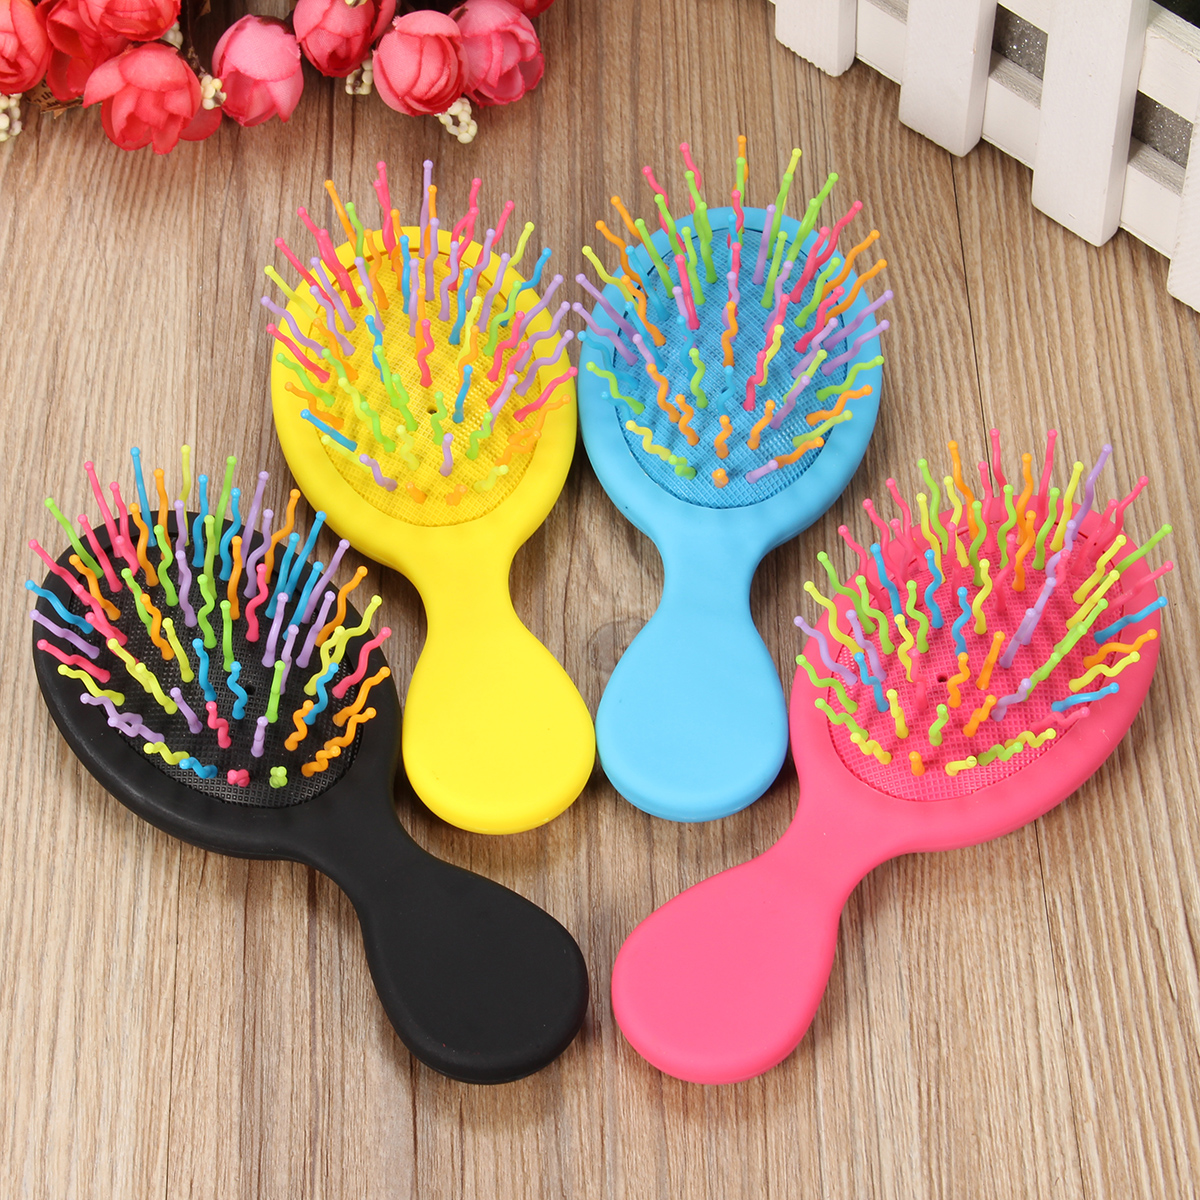 

Rainbow Comb Rubble Soft Brush Hair Styling Hairdressing Barber Salon Tool Hairbrush